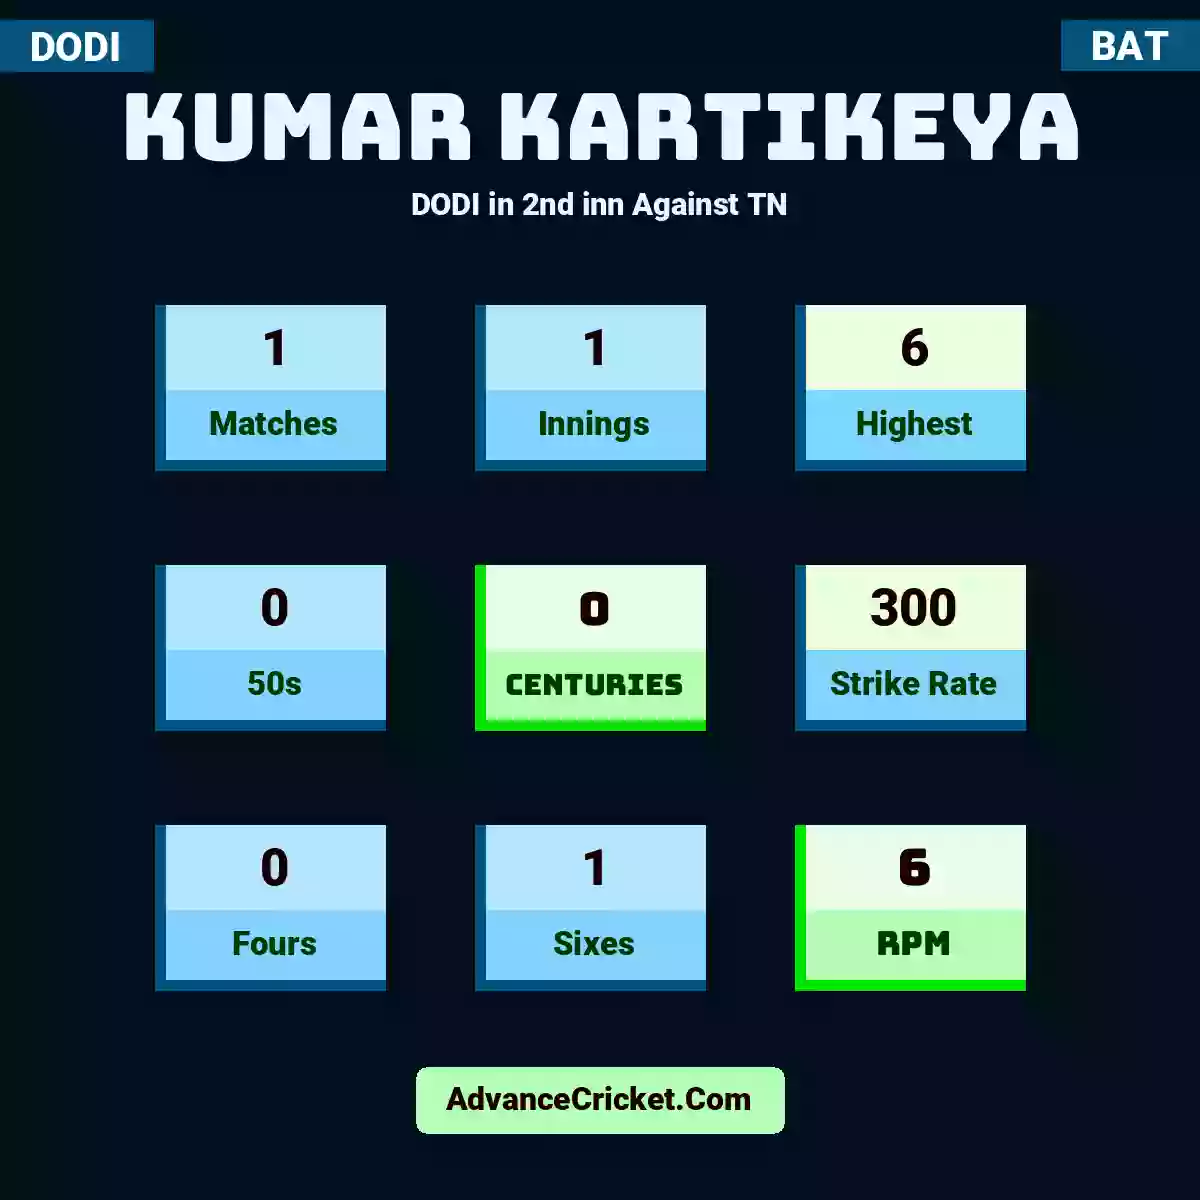 Kumar Kartikeya DODI  in 2nd inn Against TN, Kumar Kartikeya played 1 matches, scored 6 runs as highest, 0 half-centuries, and 0 centuries, with a strike rate of 300. K.Kartikeya hit 0 fours and 1 sixes, with an RPM of 6.